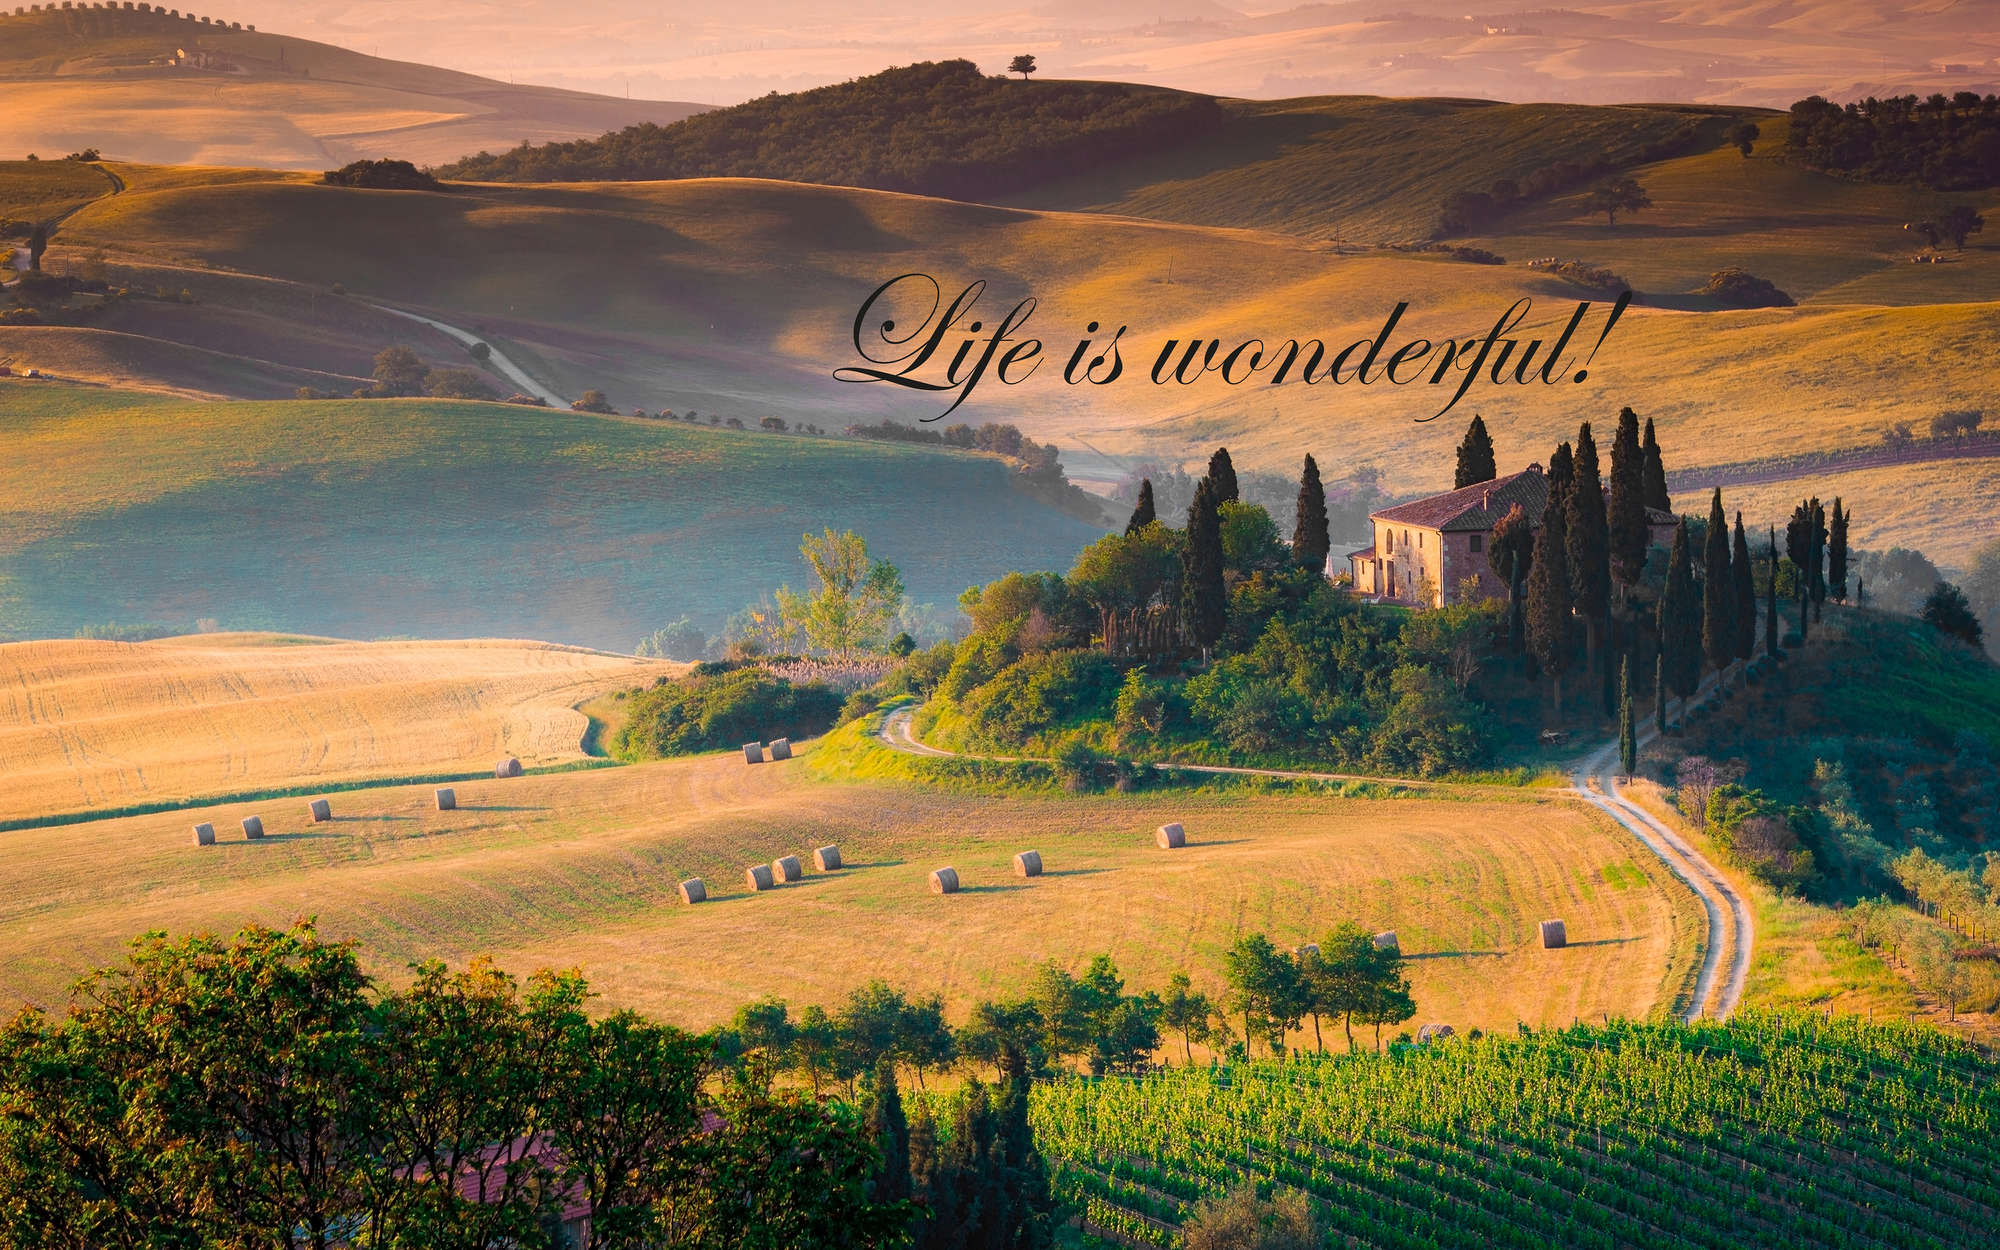             Digital behang Toscane met opschrift "Life is wonderful! - Parelmoer glad vlies
        